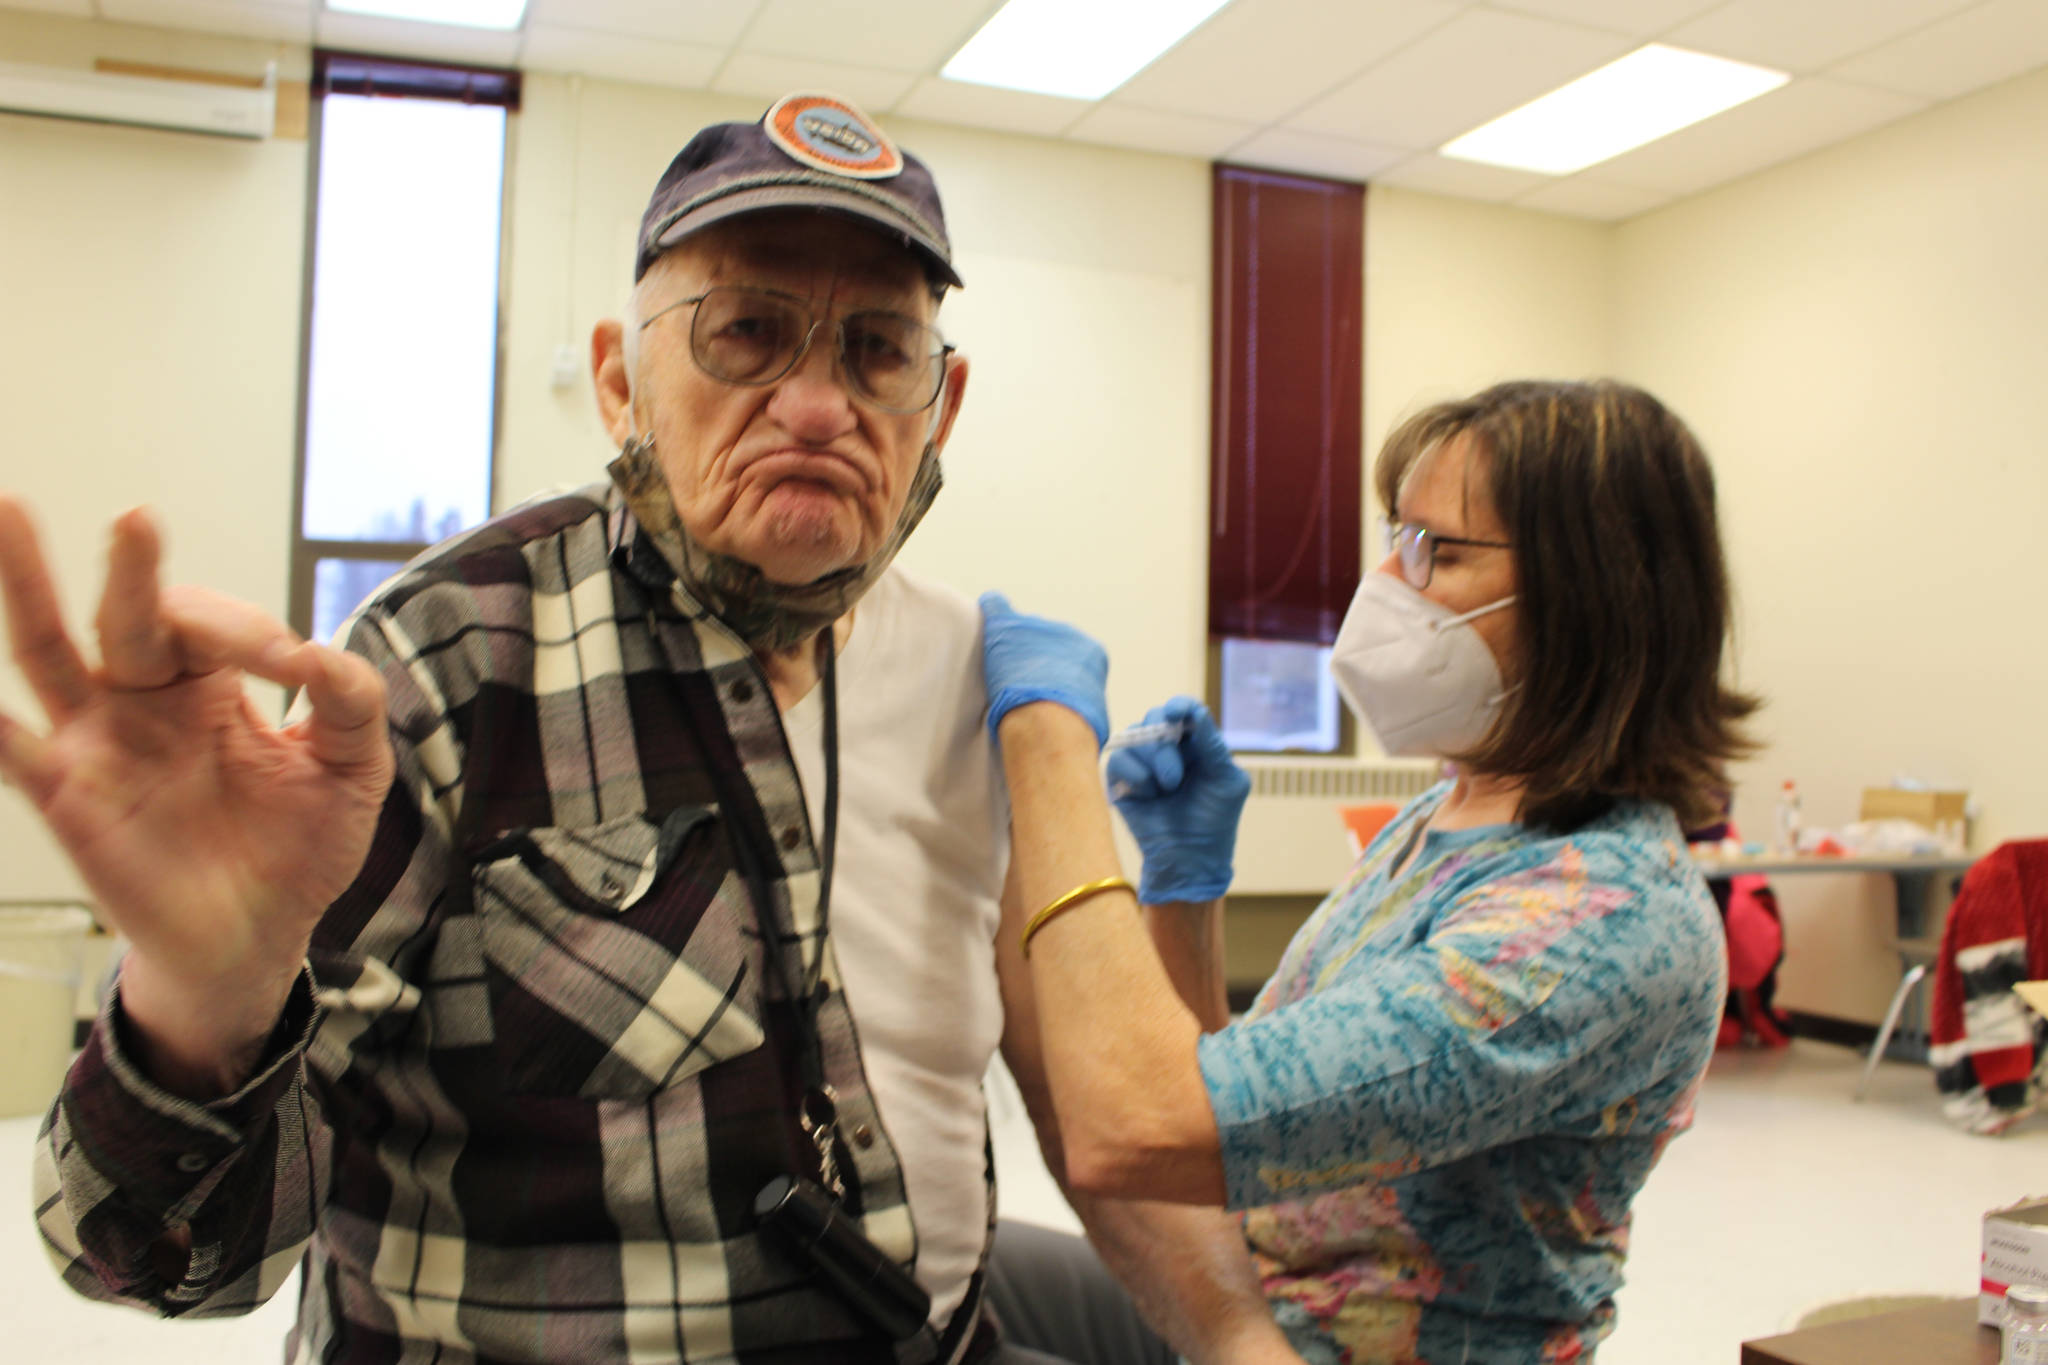 Retired school nurse Tracy Silta adminsters the COVID-19 vaccine to Raymond Schoessler at the Soldotna Prep School in Soldotna, Alaska on Jan. 23, 2021. (Photo by Brian Mazurek/Peninsula Clarion)